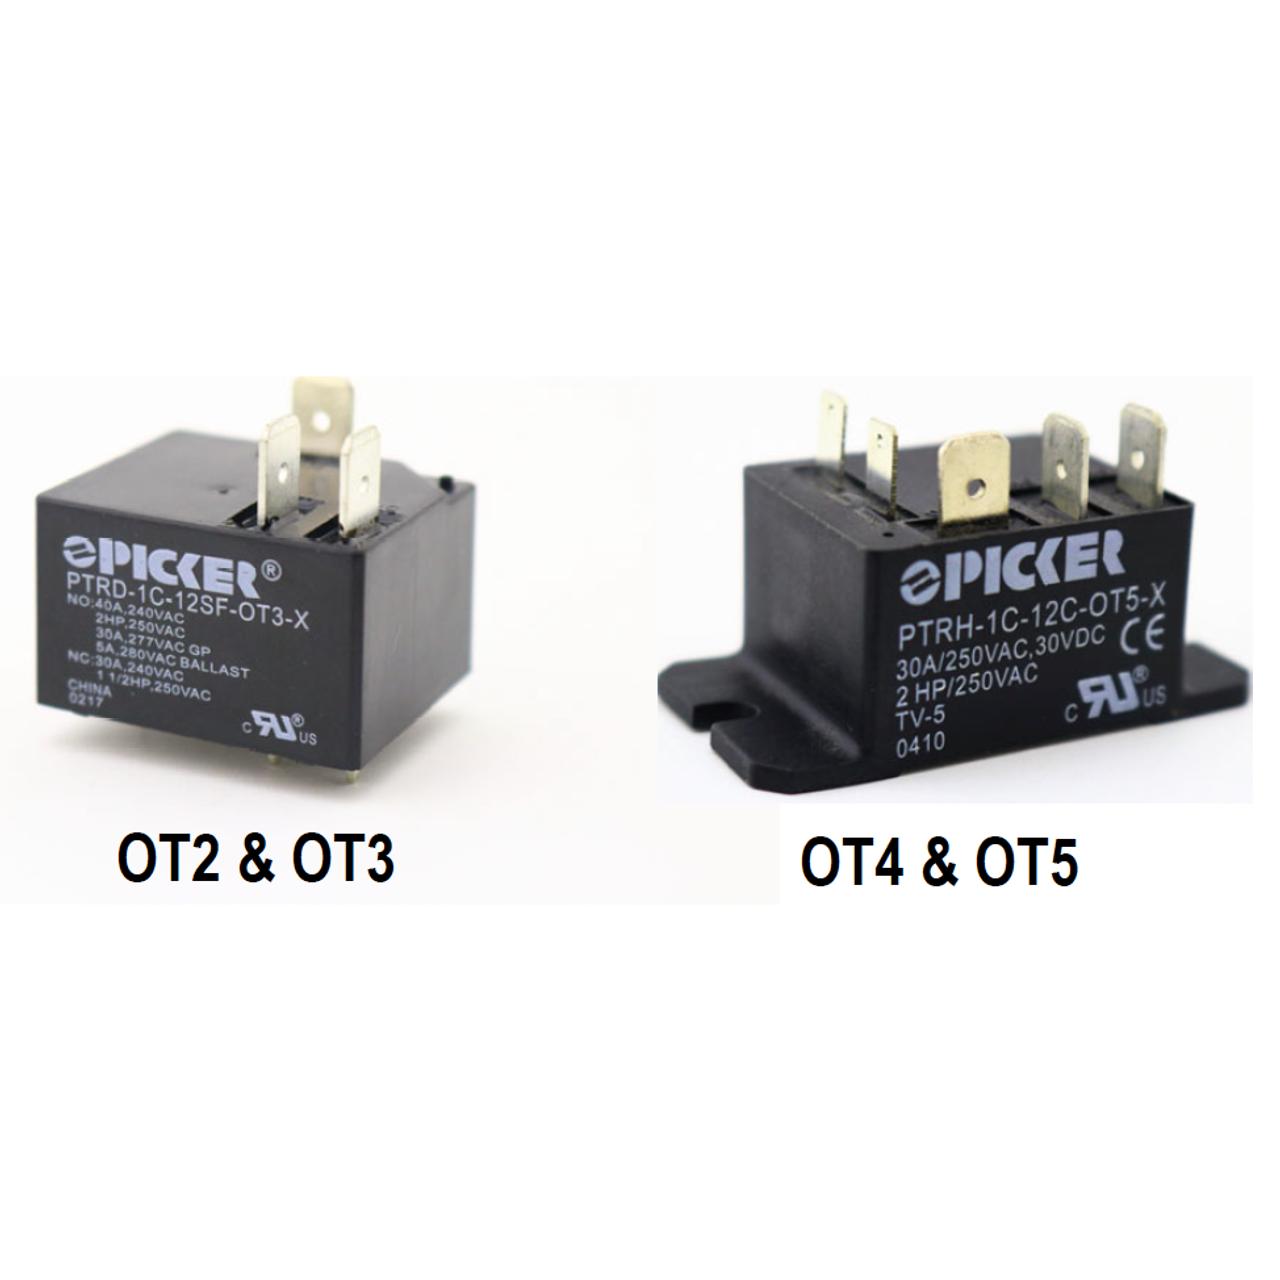 Picker PTRH-1C-110CFT-OT3-XA Power Relays